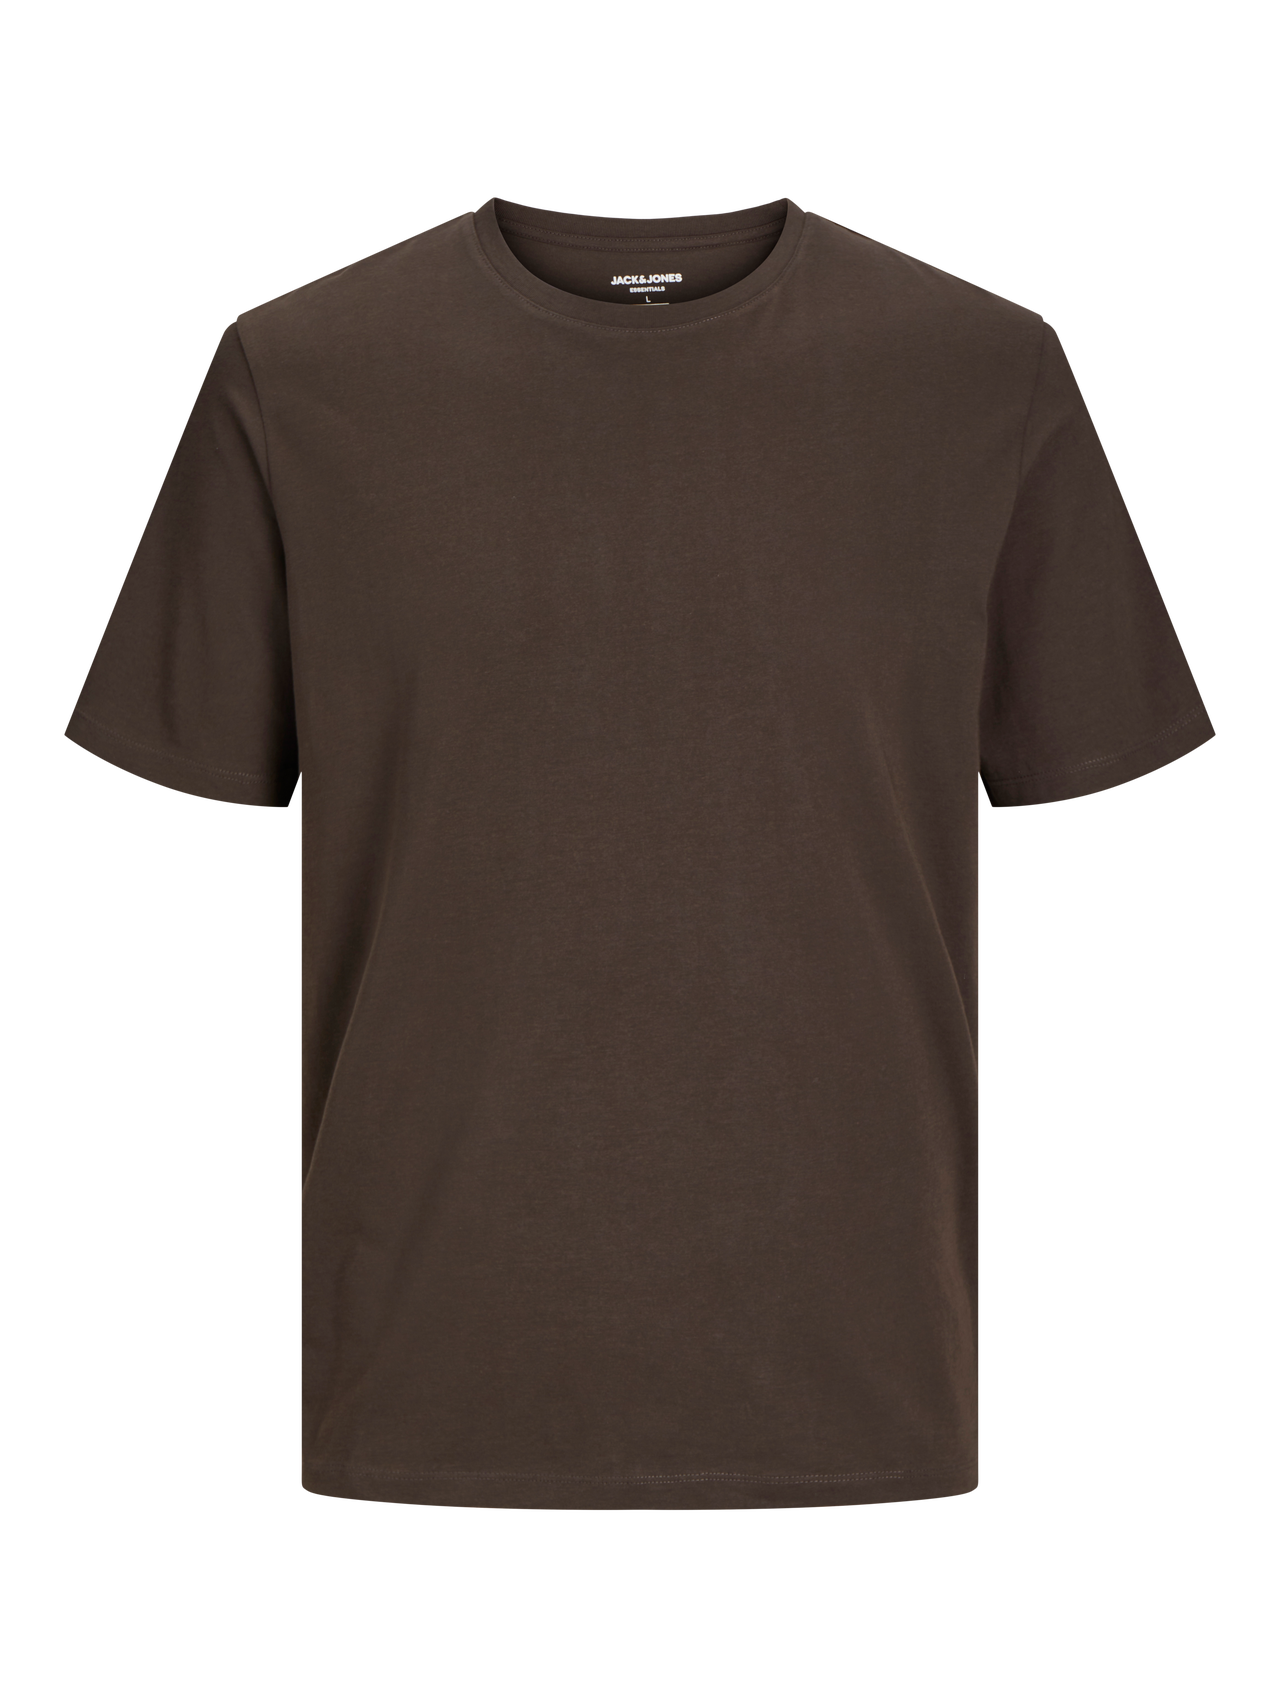 Jack & Jones Plain Crew neck T-shirt -Mulch - 12156101